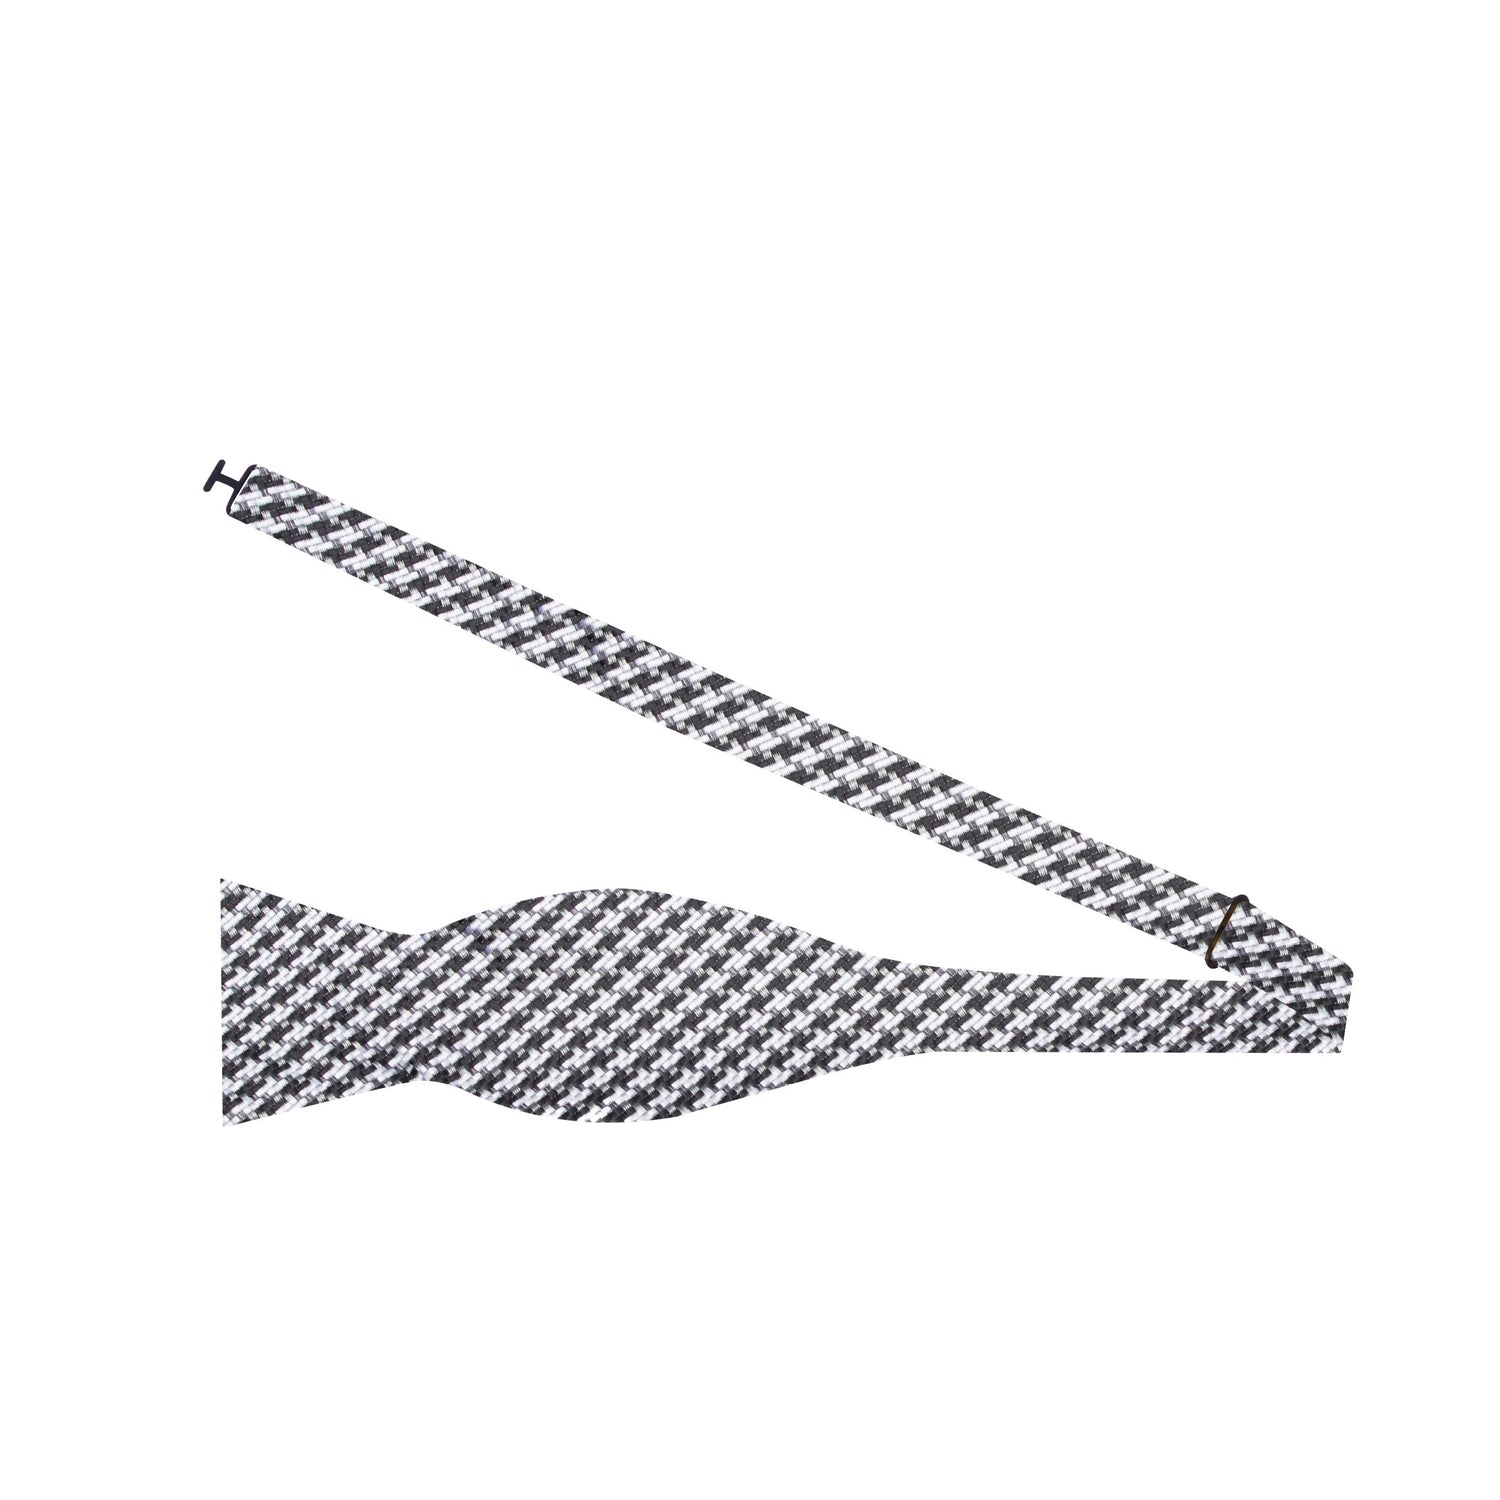 A Black, Grey Geometric Houndstooth Pattern Self Tie Bow Tie Untied